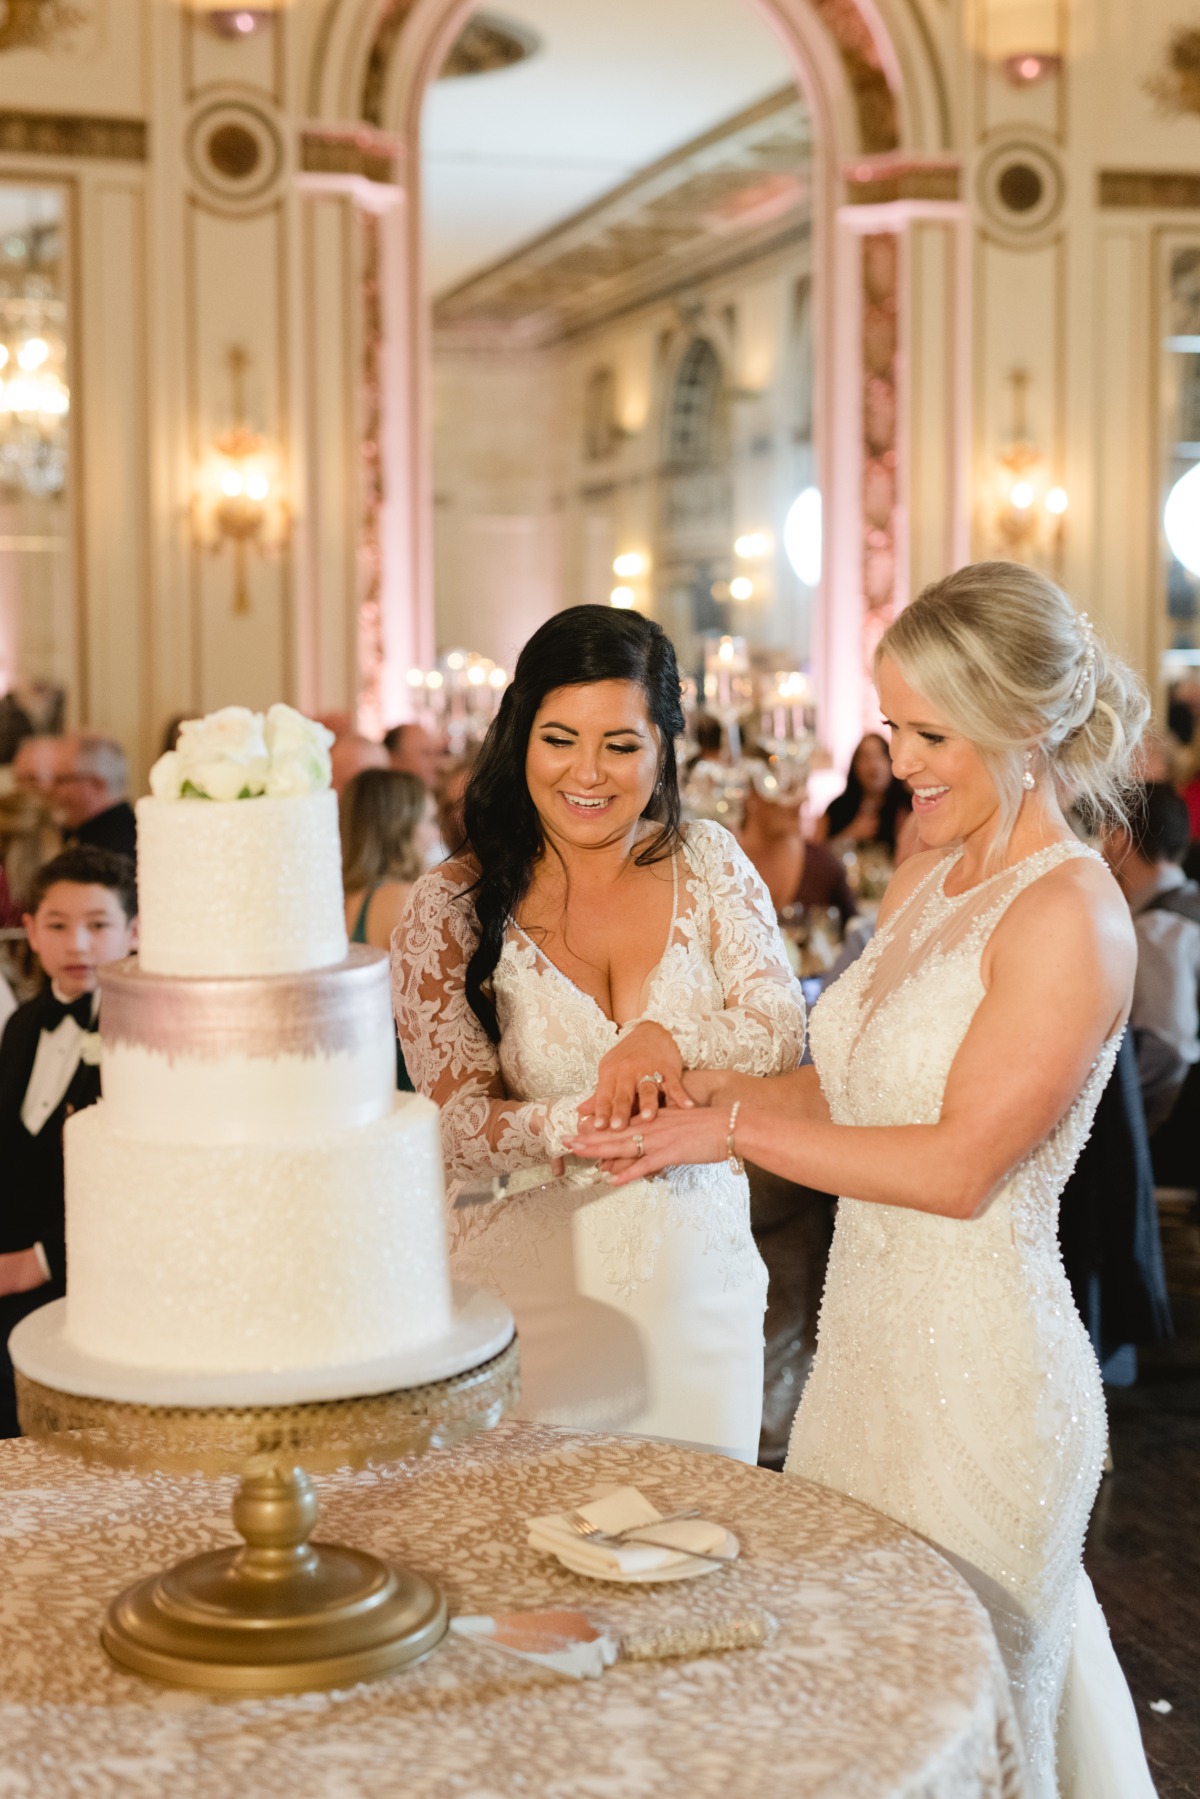 Two brides cutting wedding cake